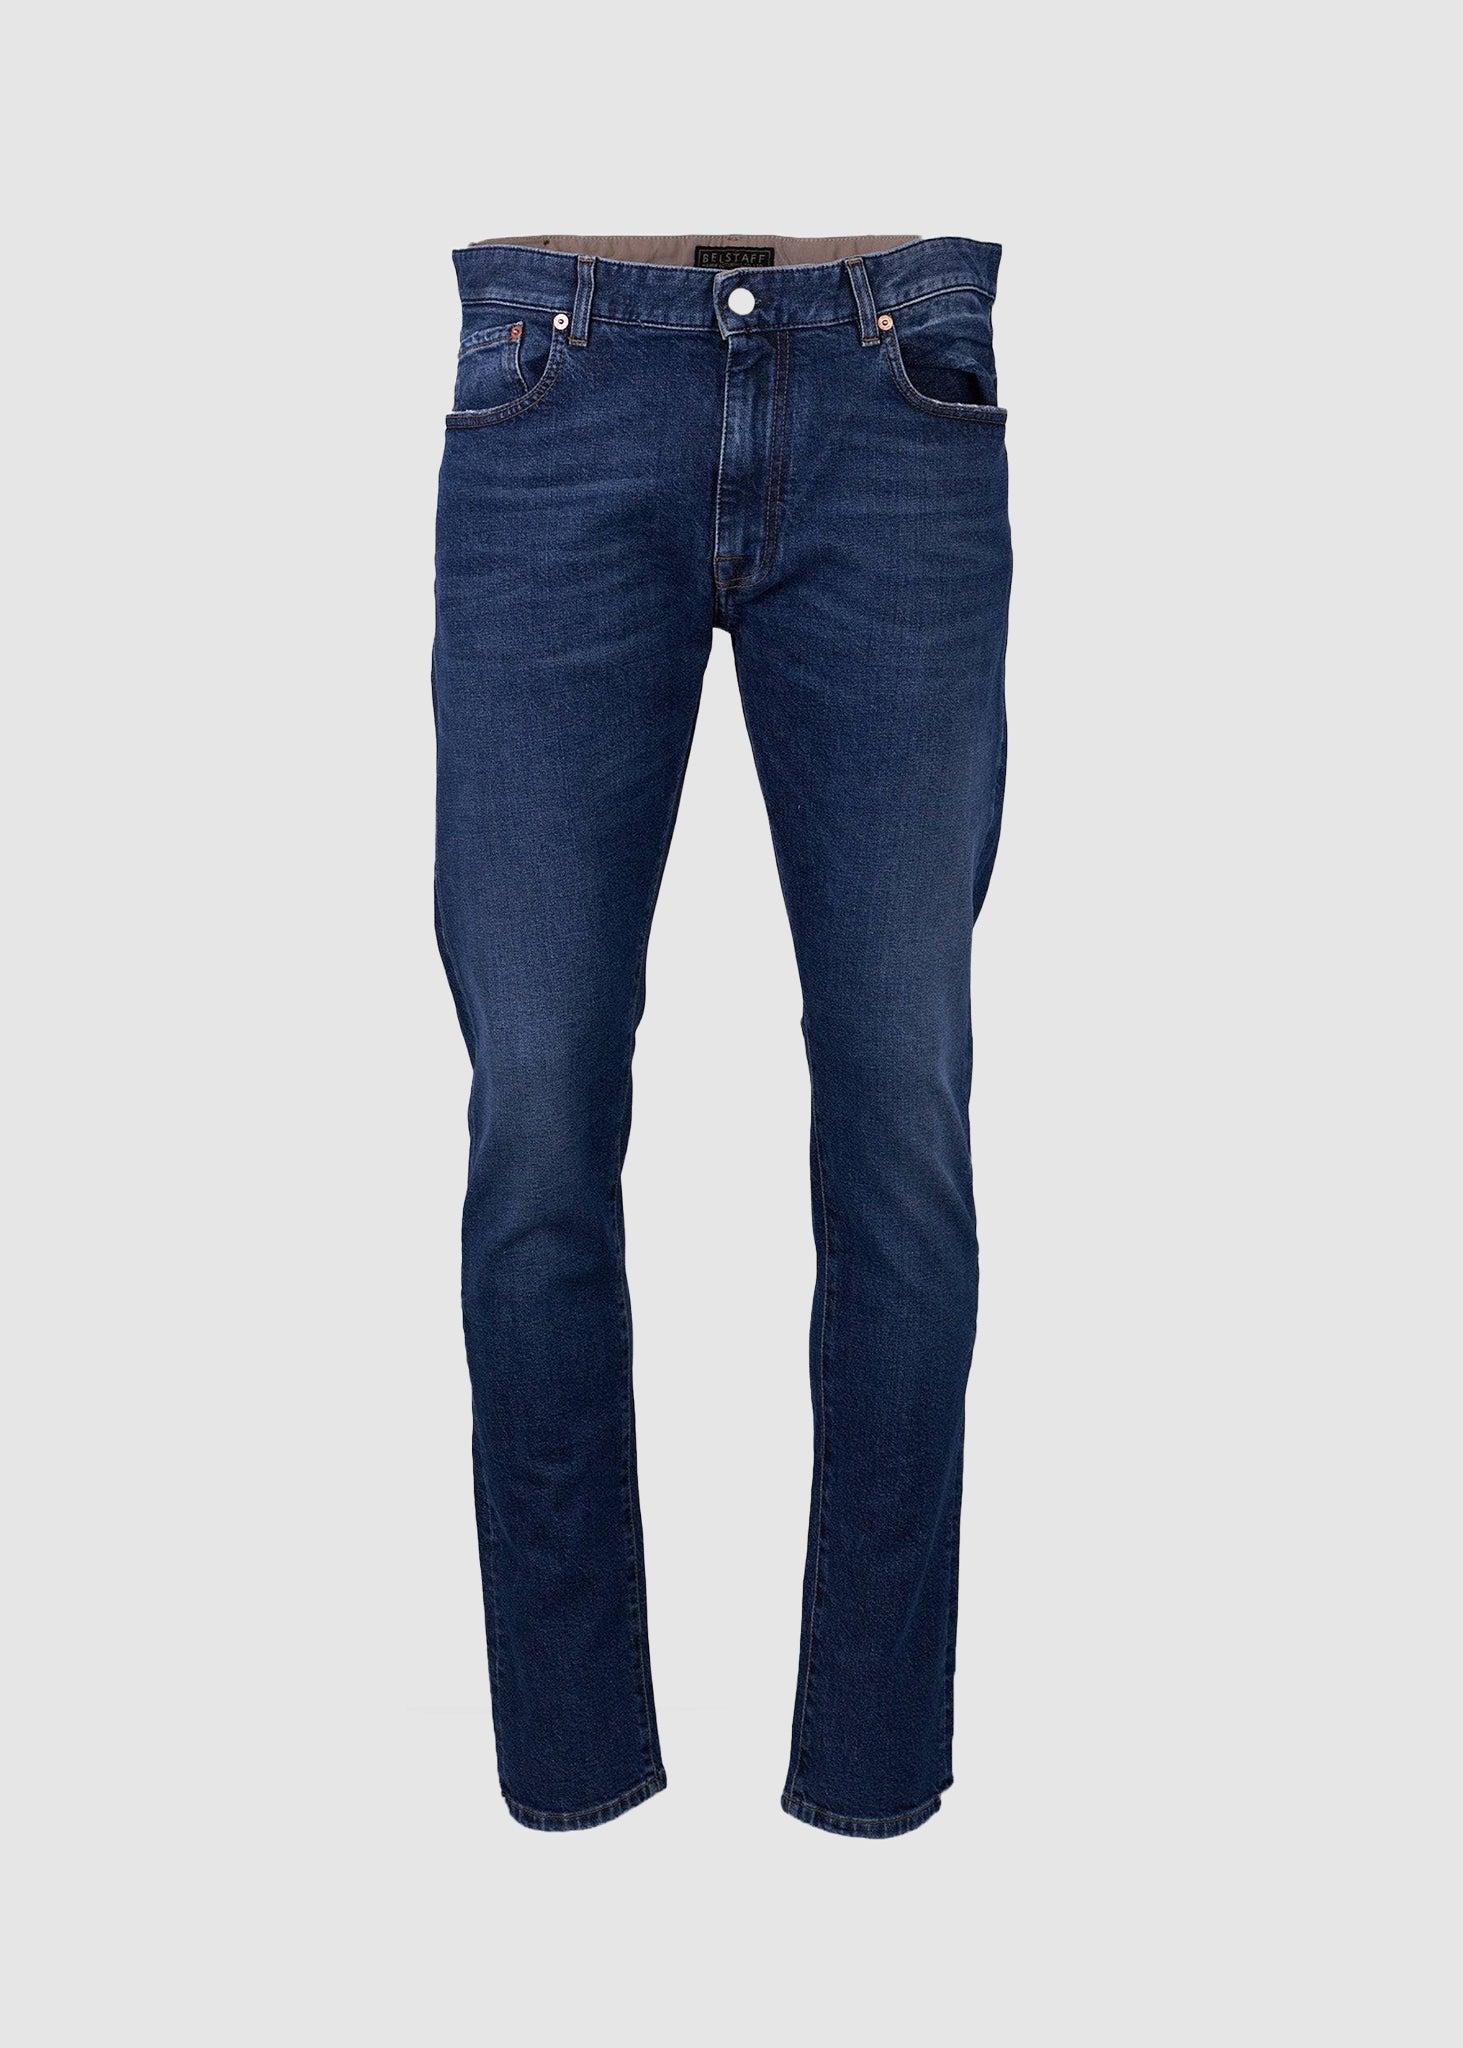 Belstaff Longton Slim Jeans in Blue for Men | Lyst UK